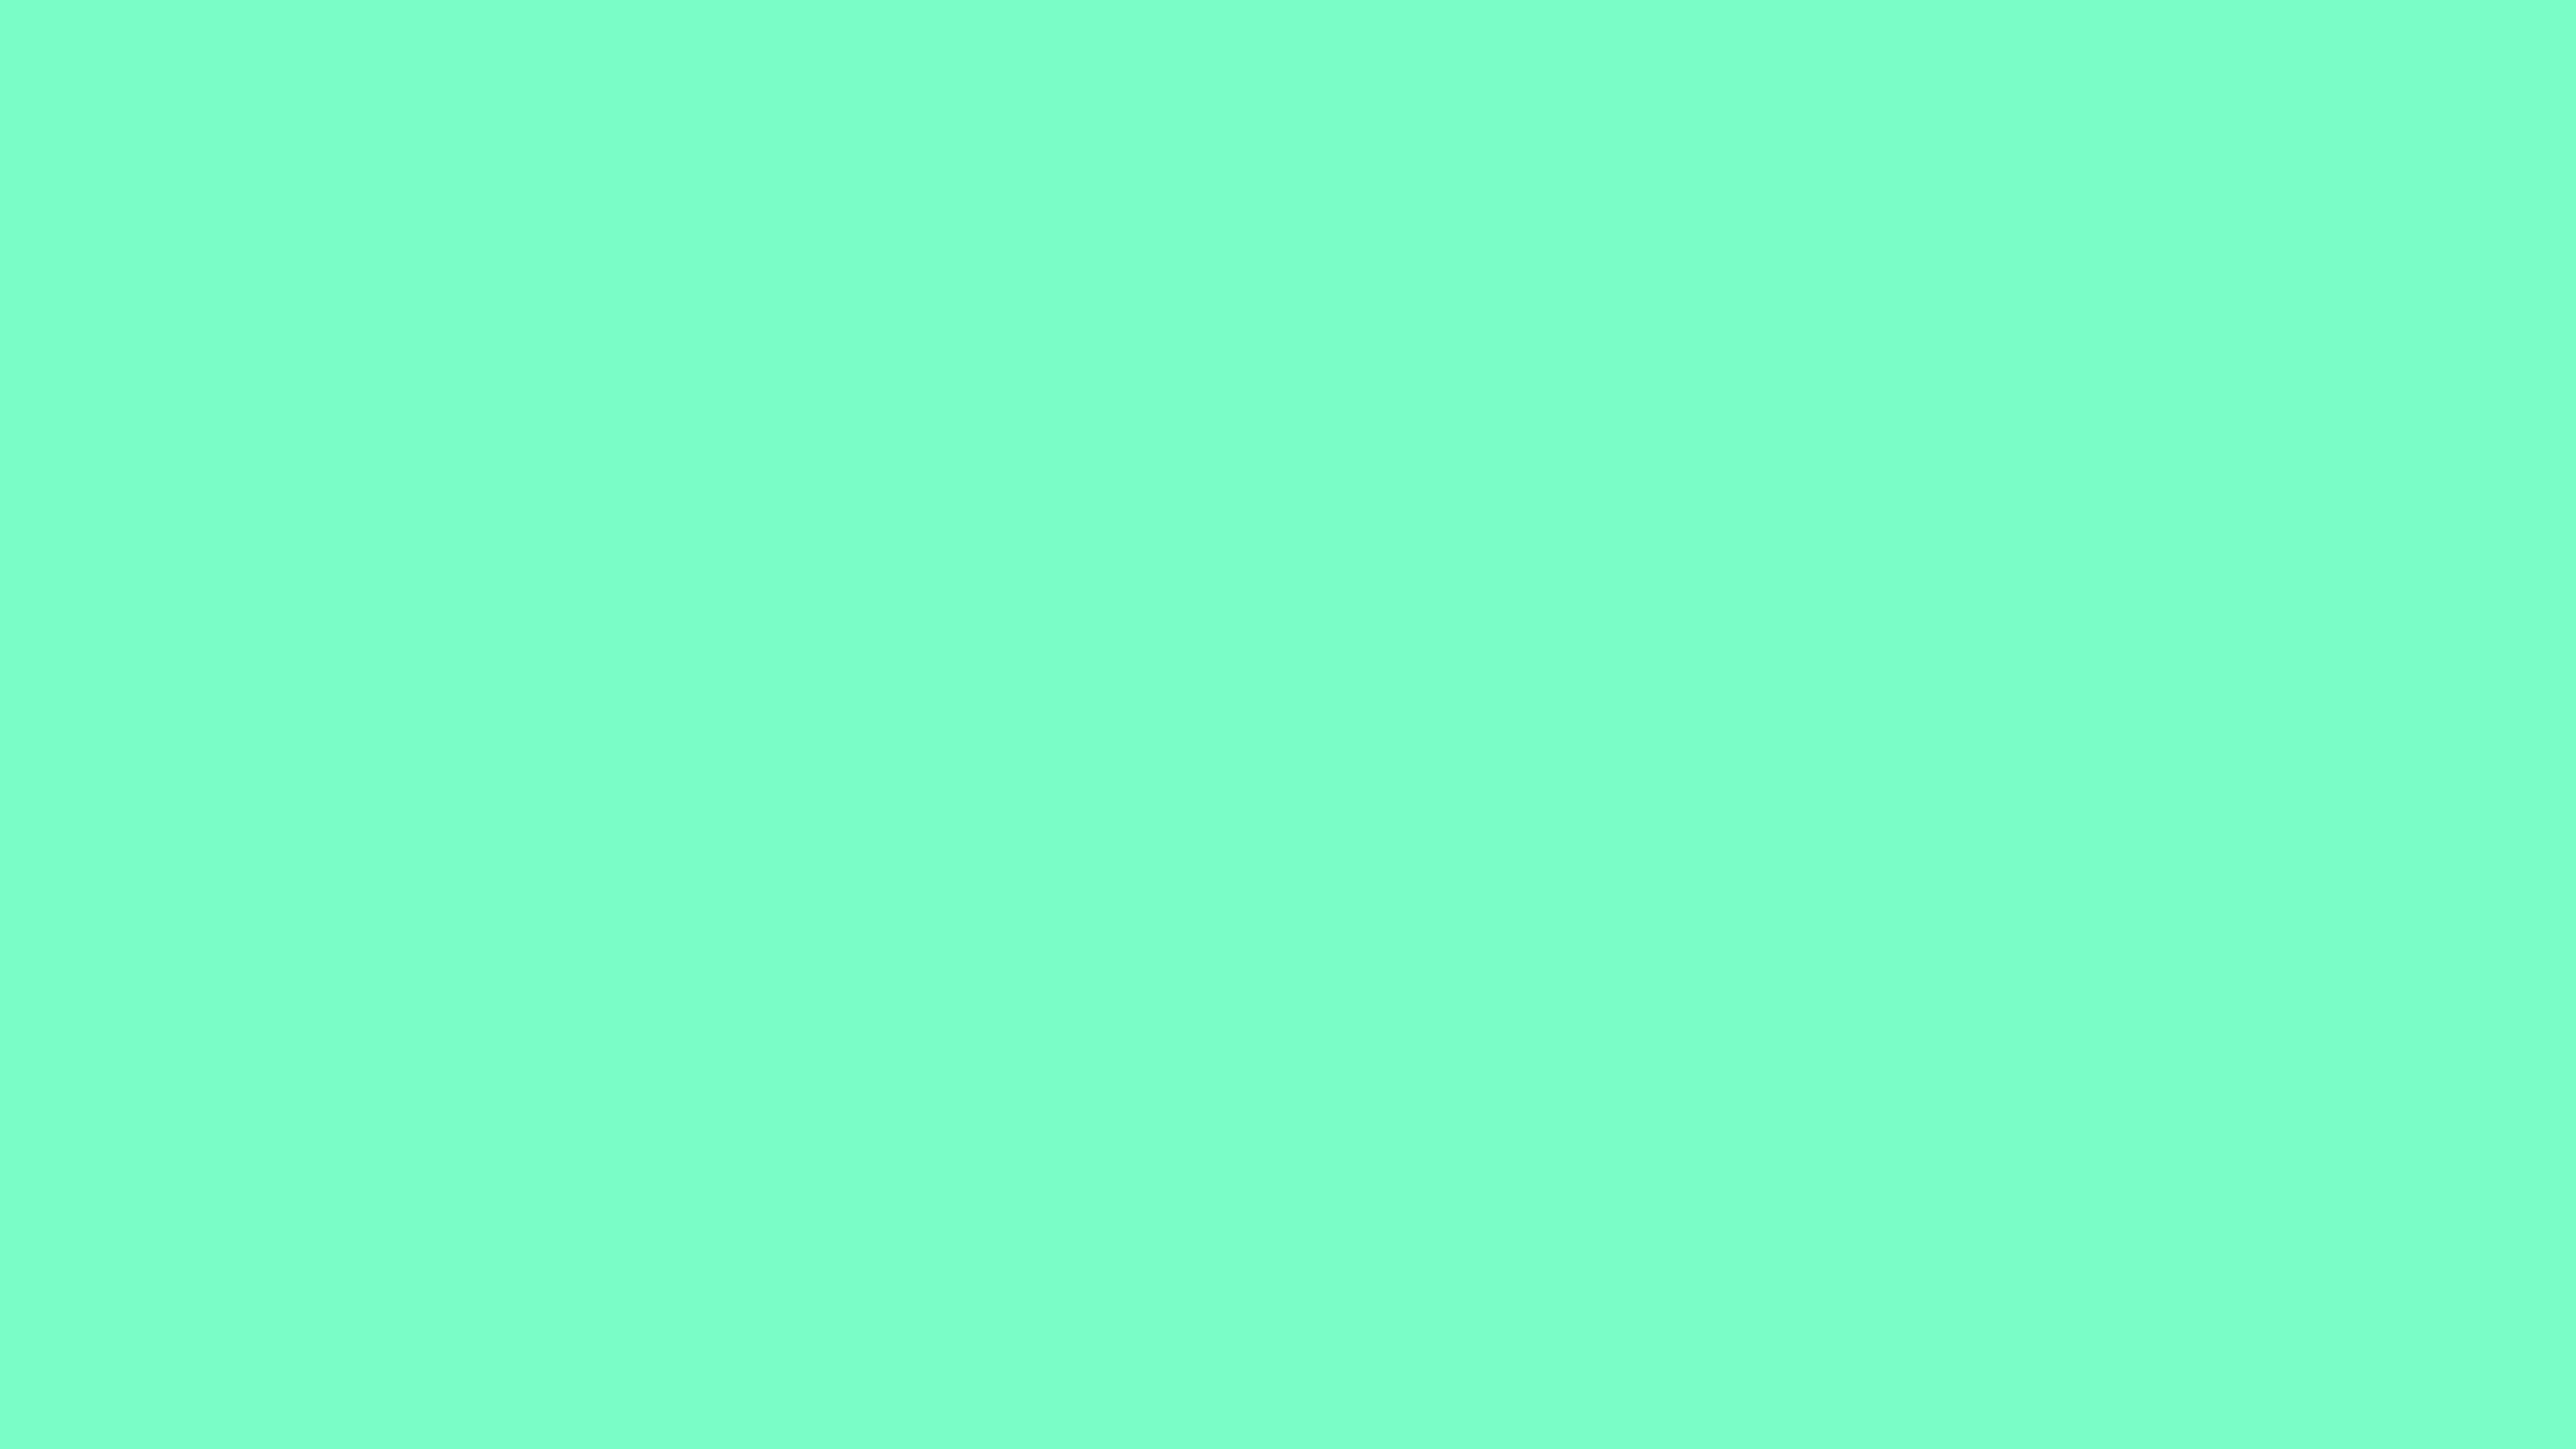 Light Aquamarine Solid Color Background Image | Free Image Generator